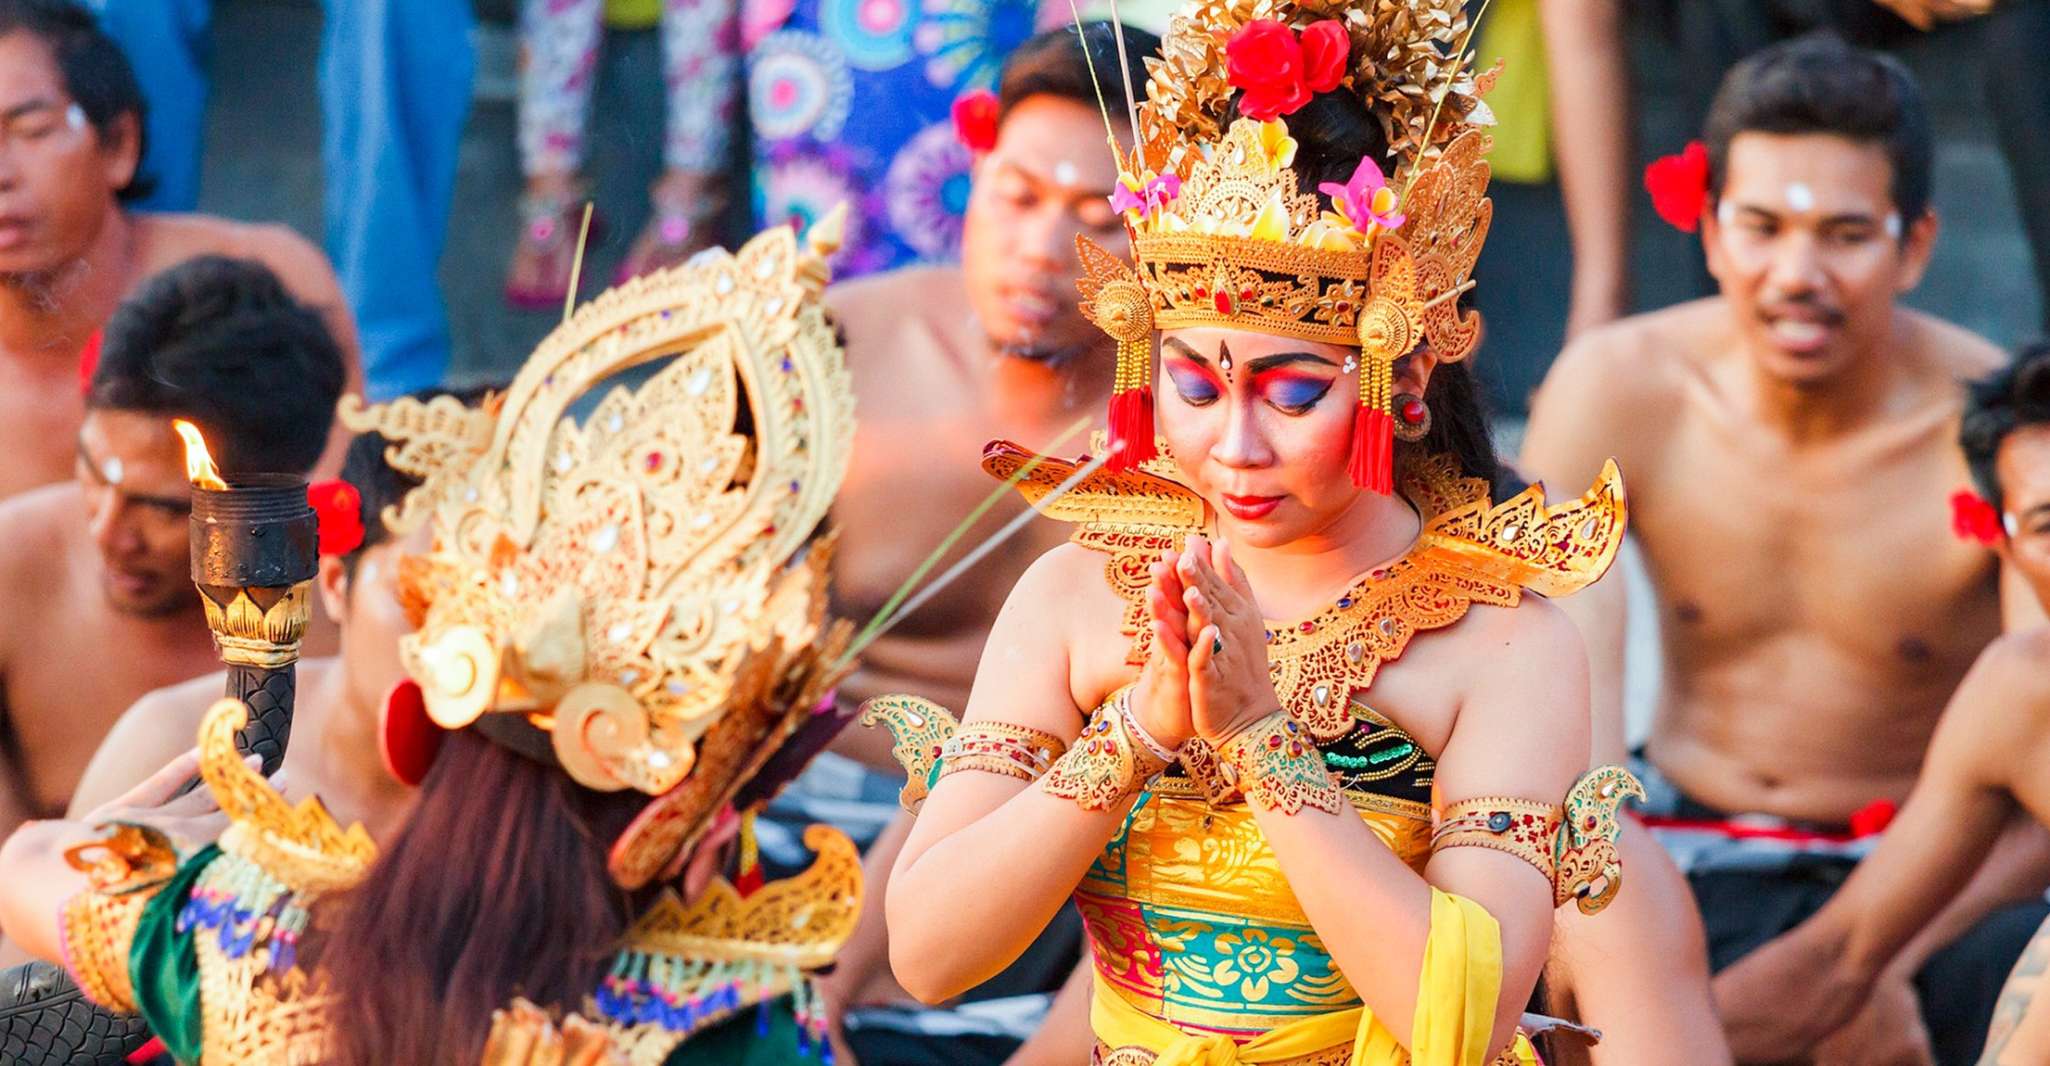 Bali, Uluwatu Kecak and Fire Dance Show Entry Ticket - Housity